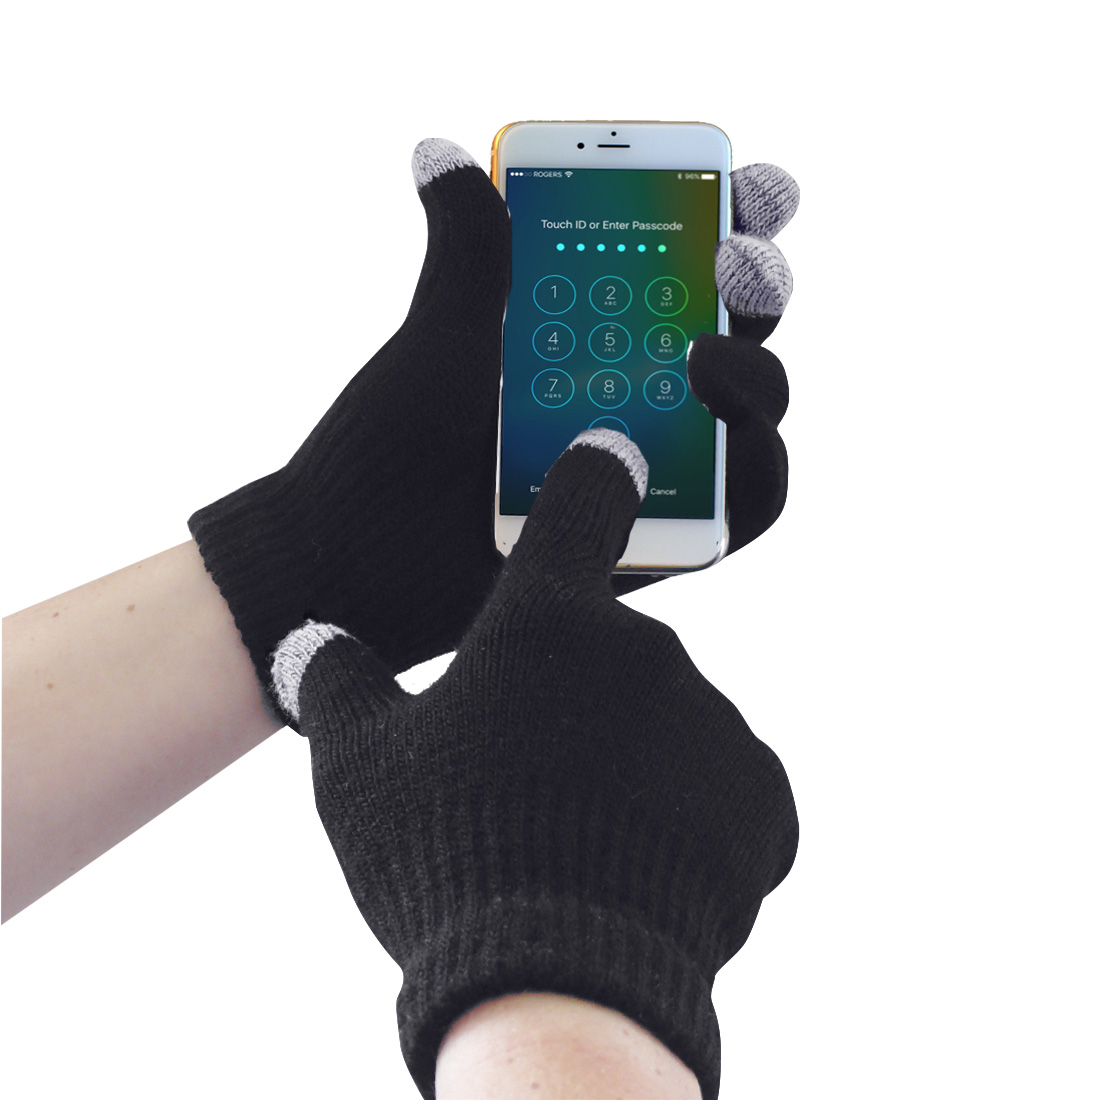 Touchscreen Knit Glove - Black